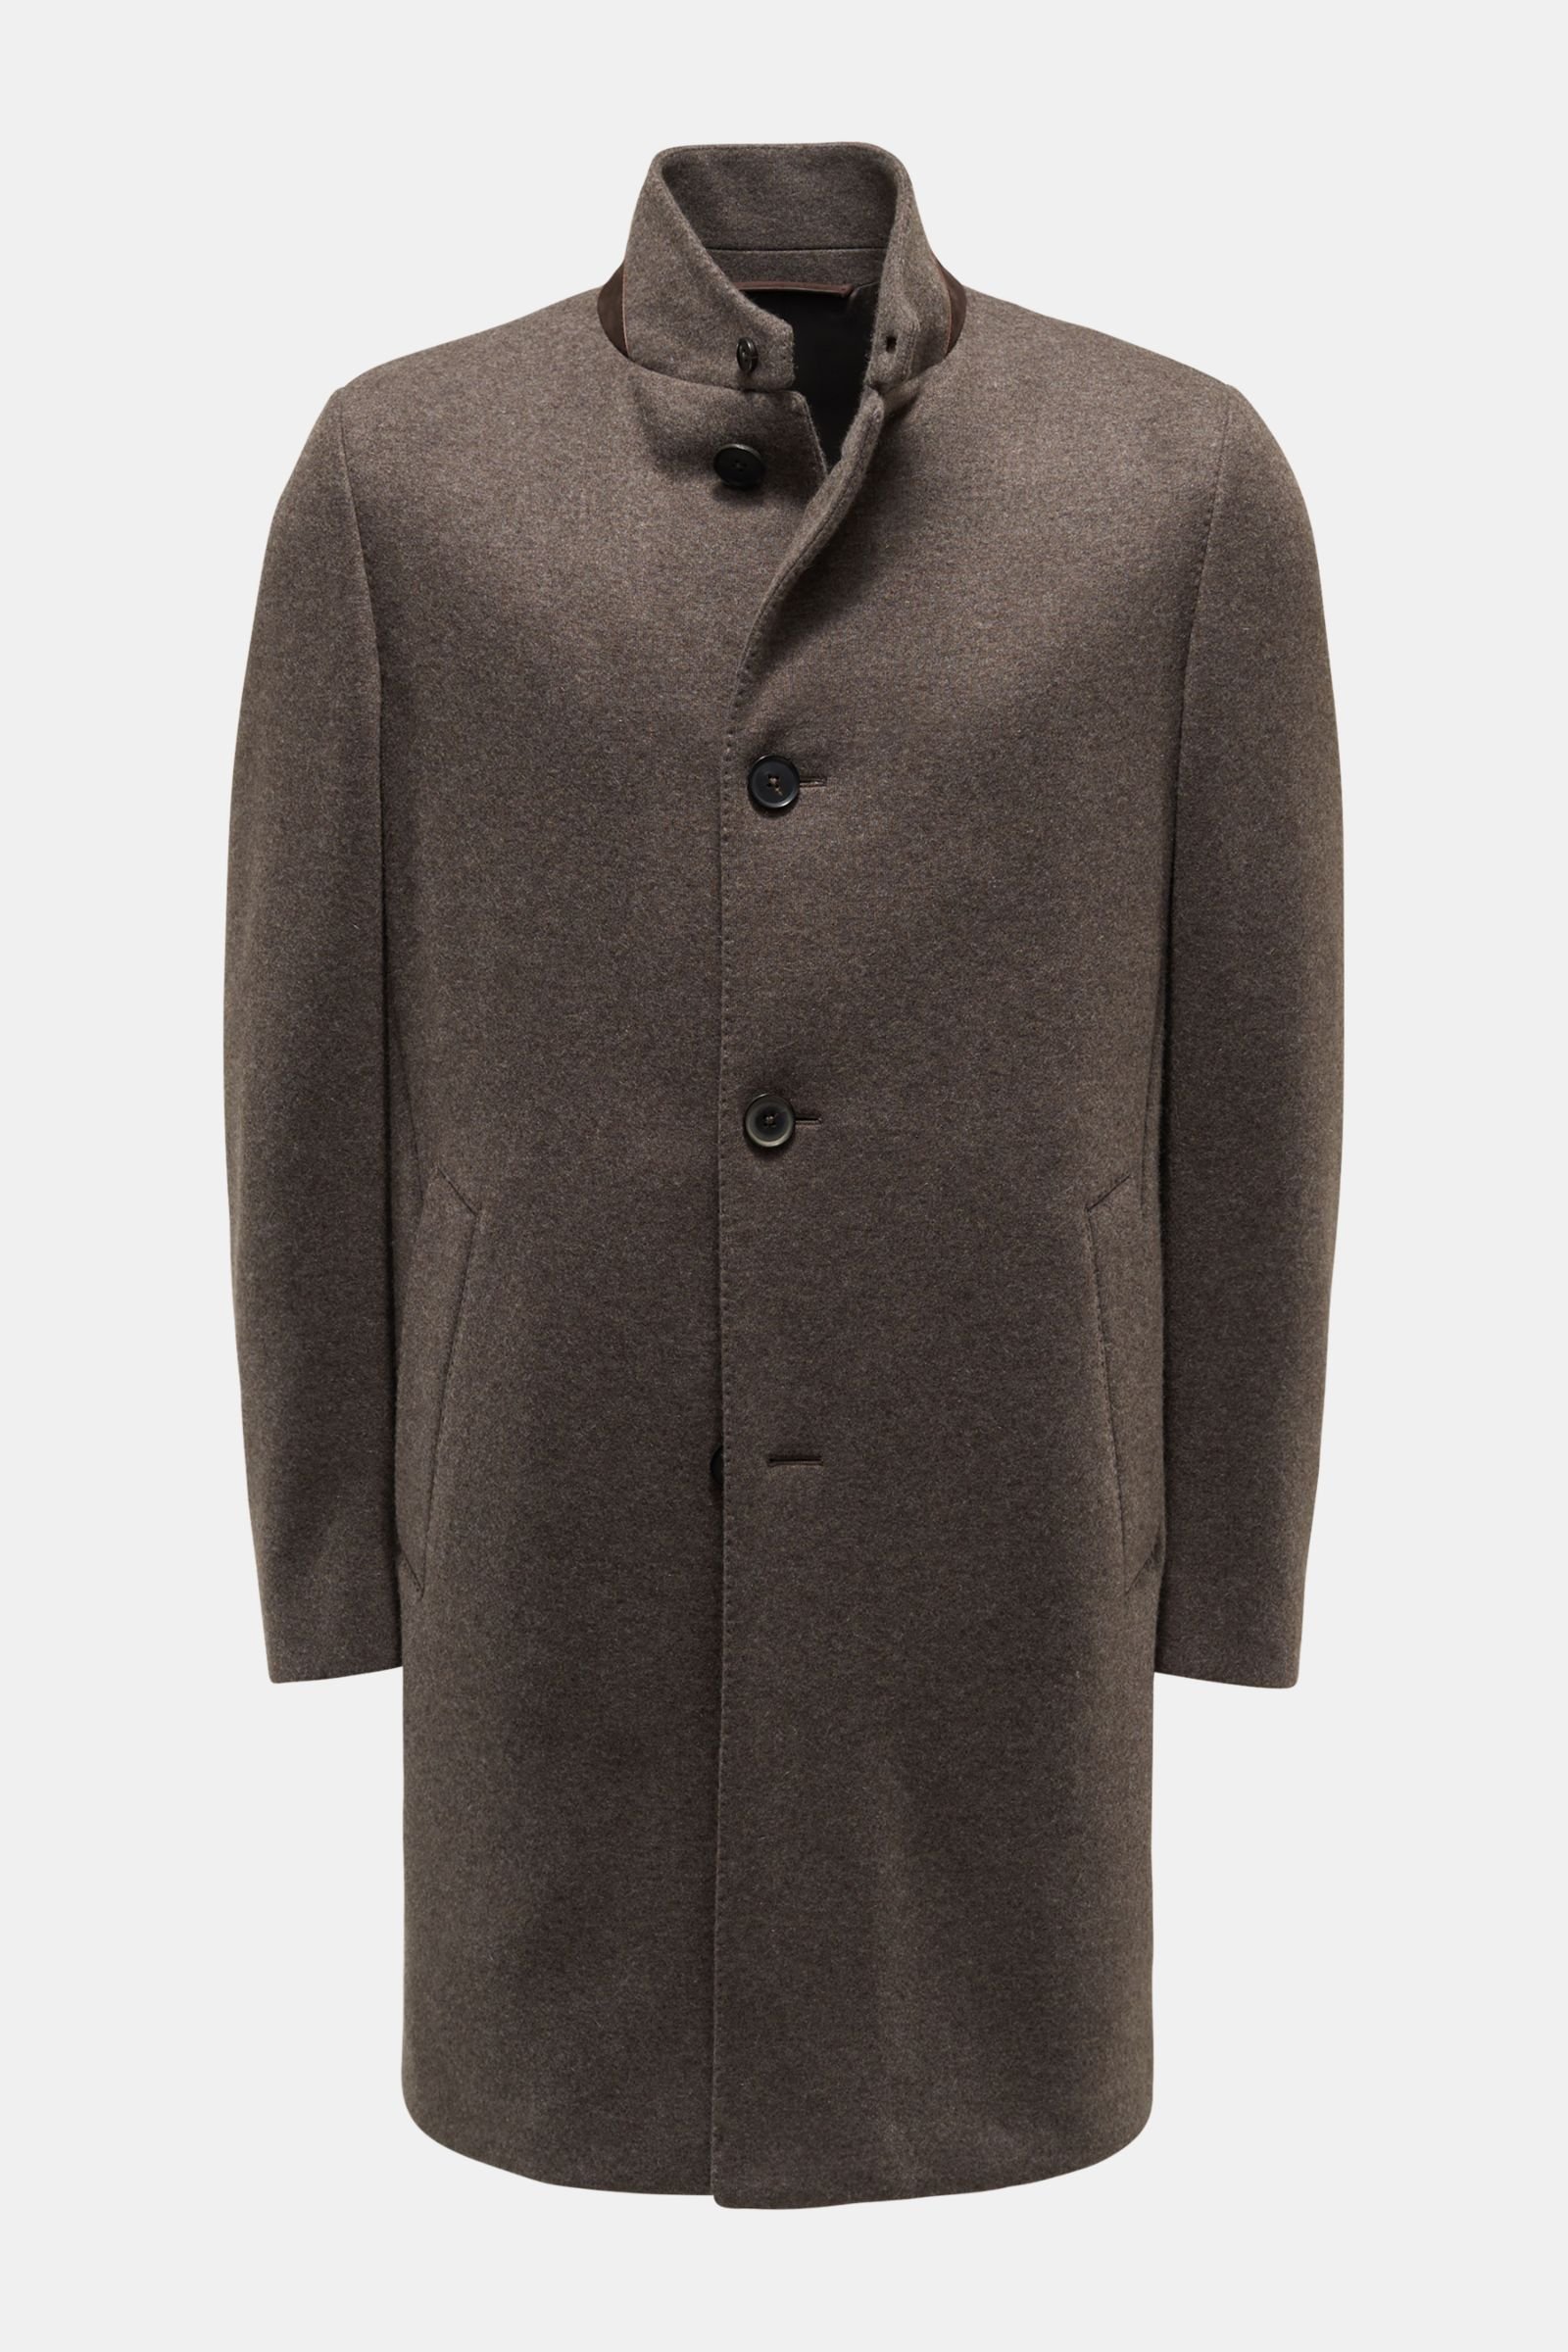 Jersey coat grey-brown